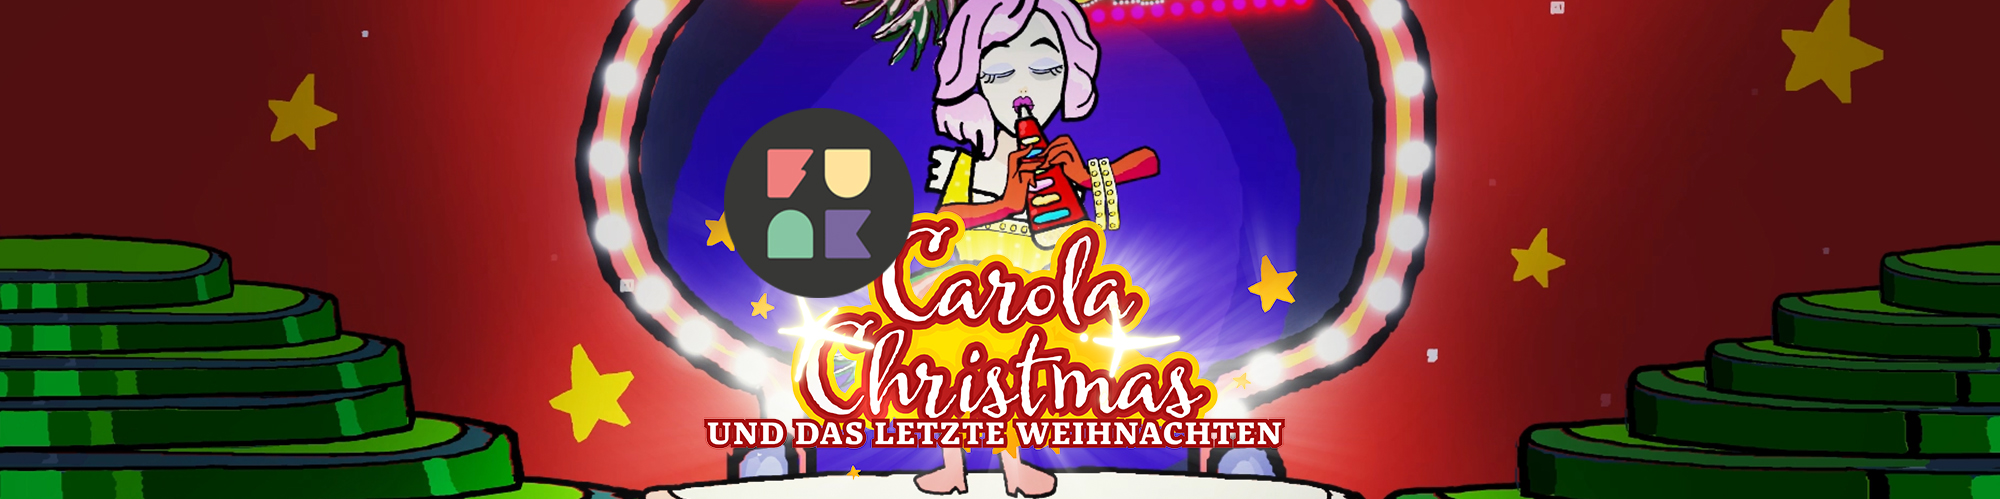 Carola Christmas (2017)